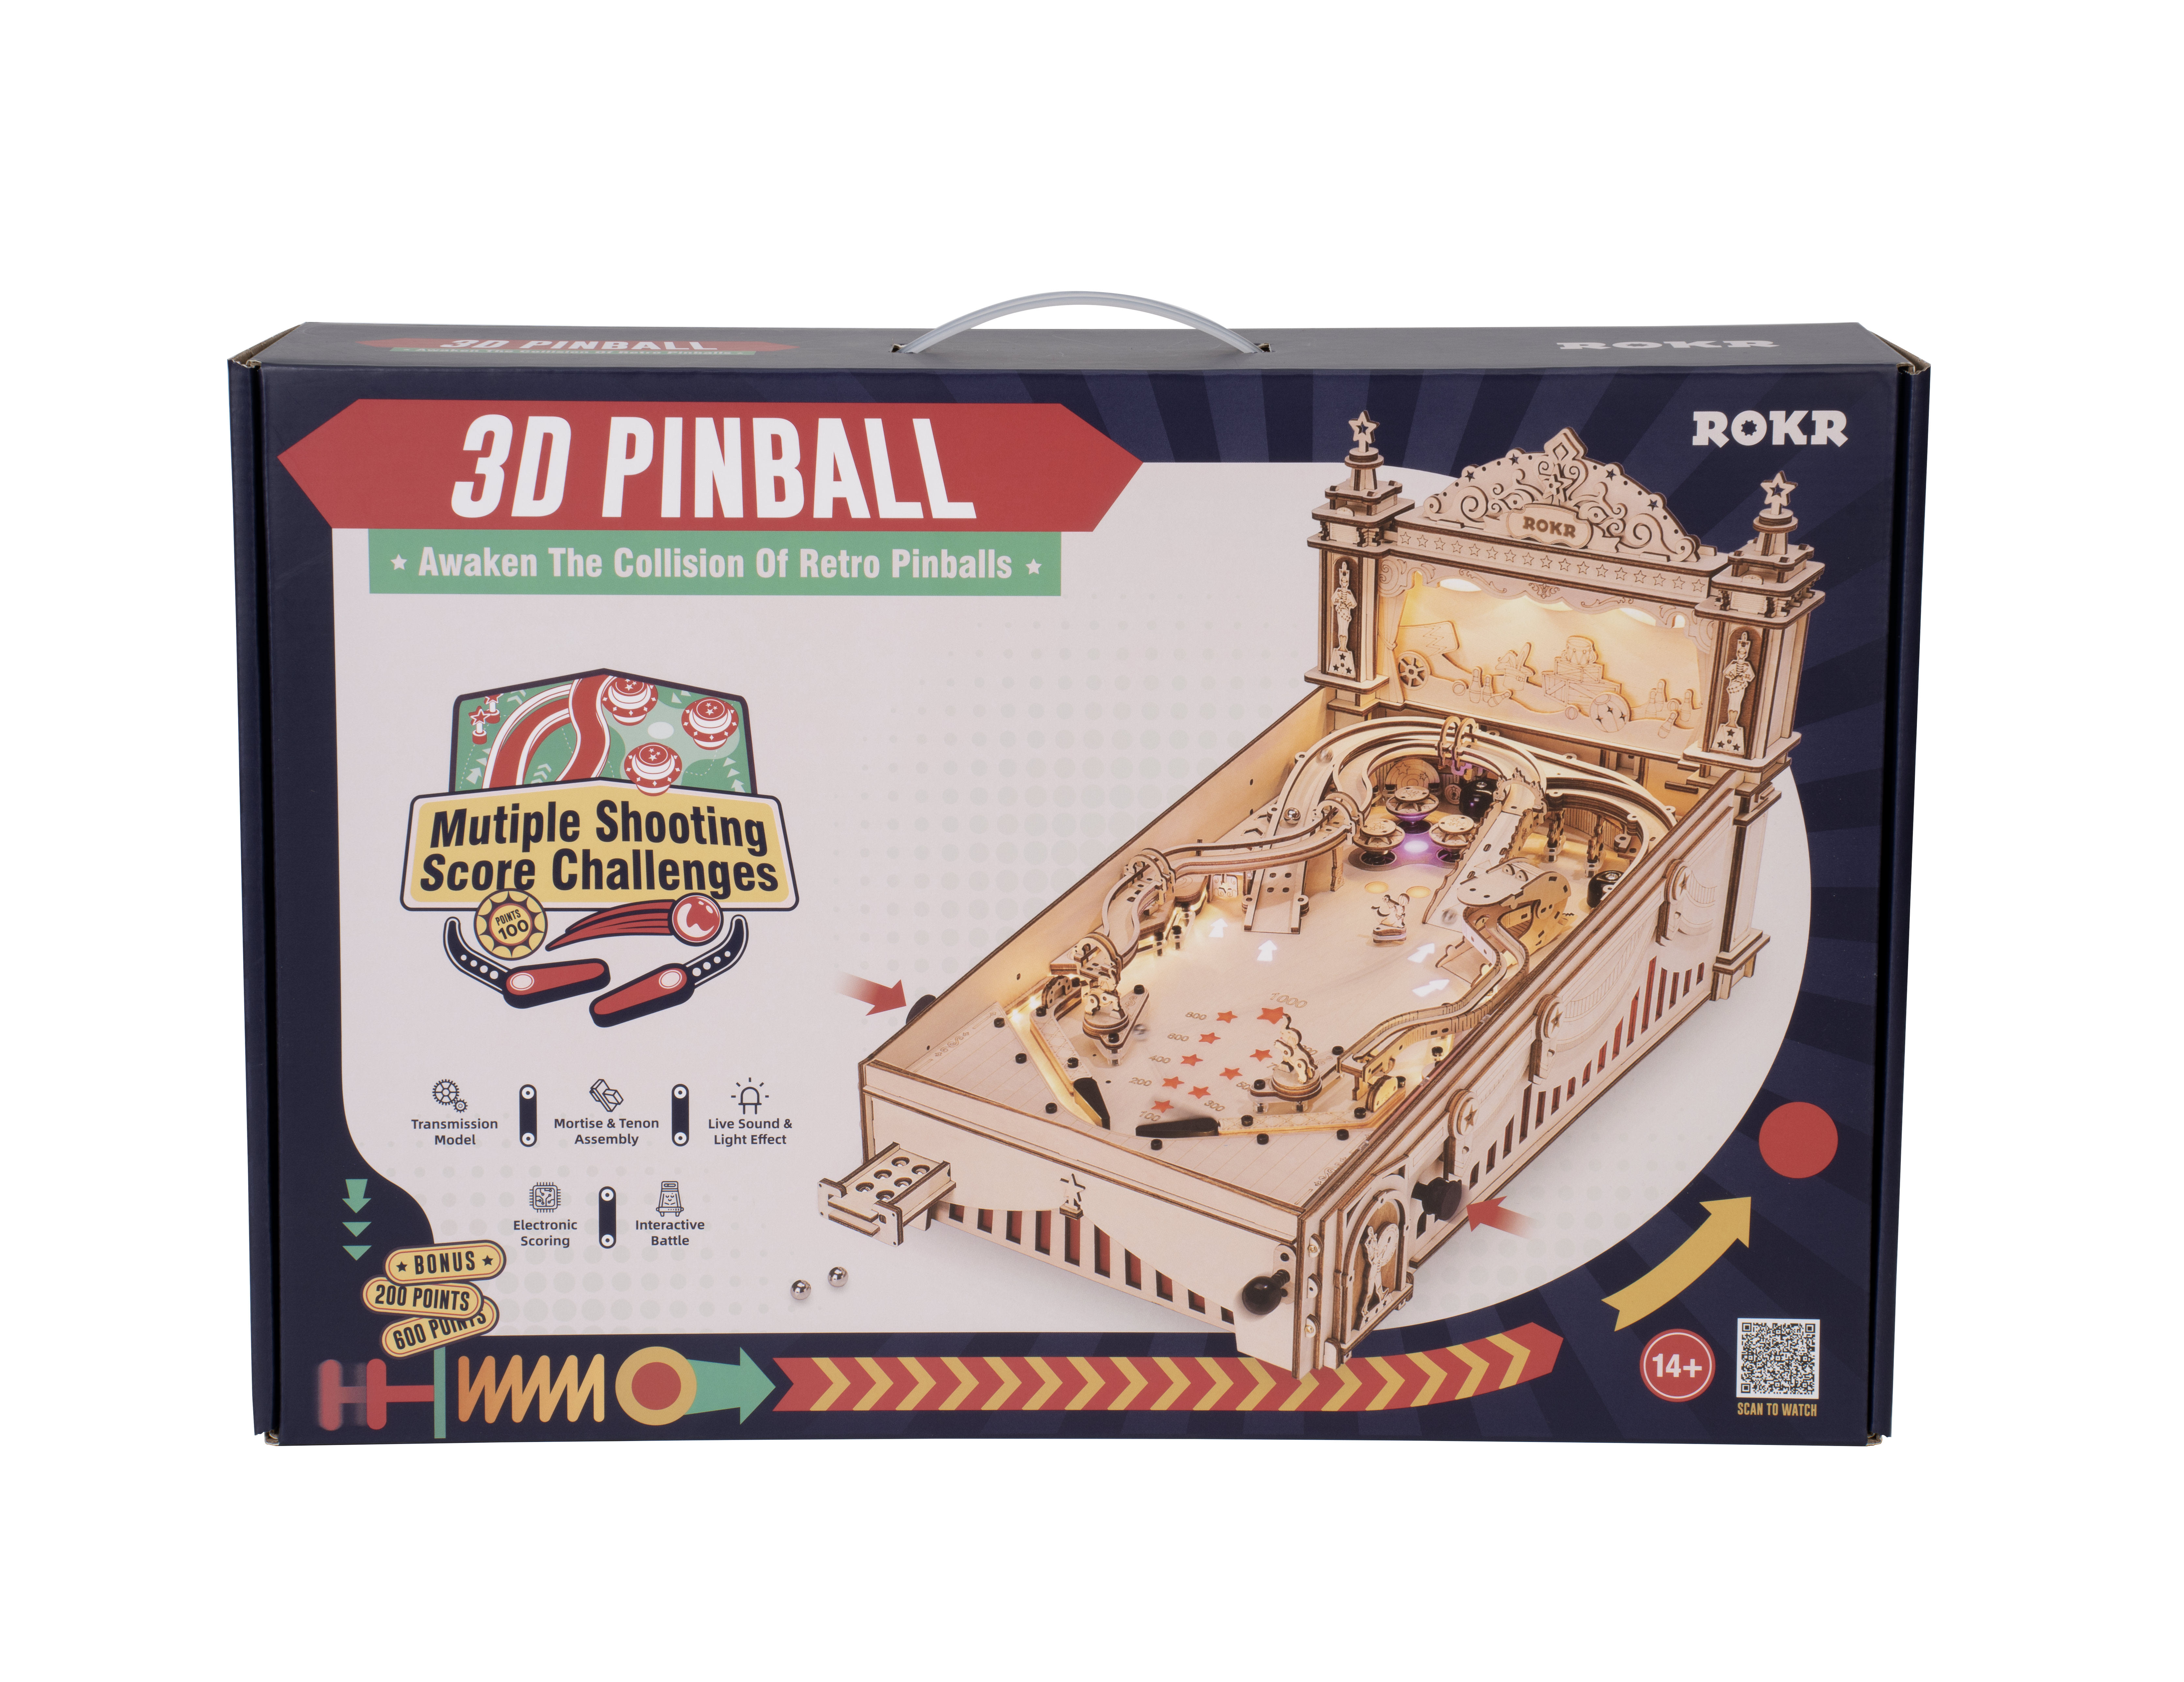 Marble Pinball Machine Woodworking Plan